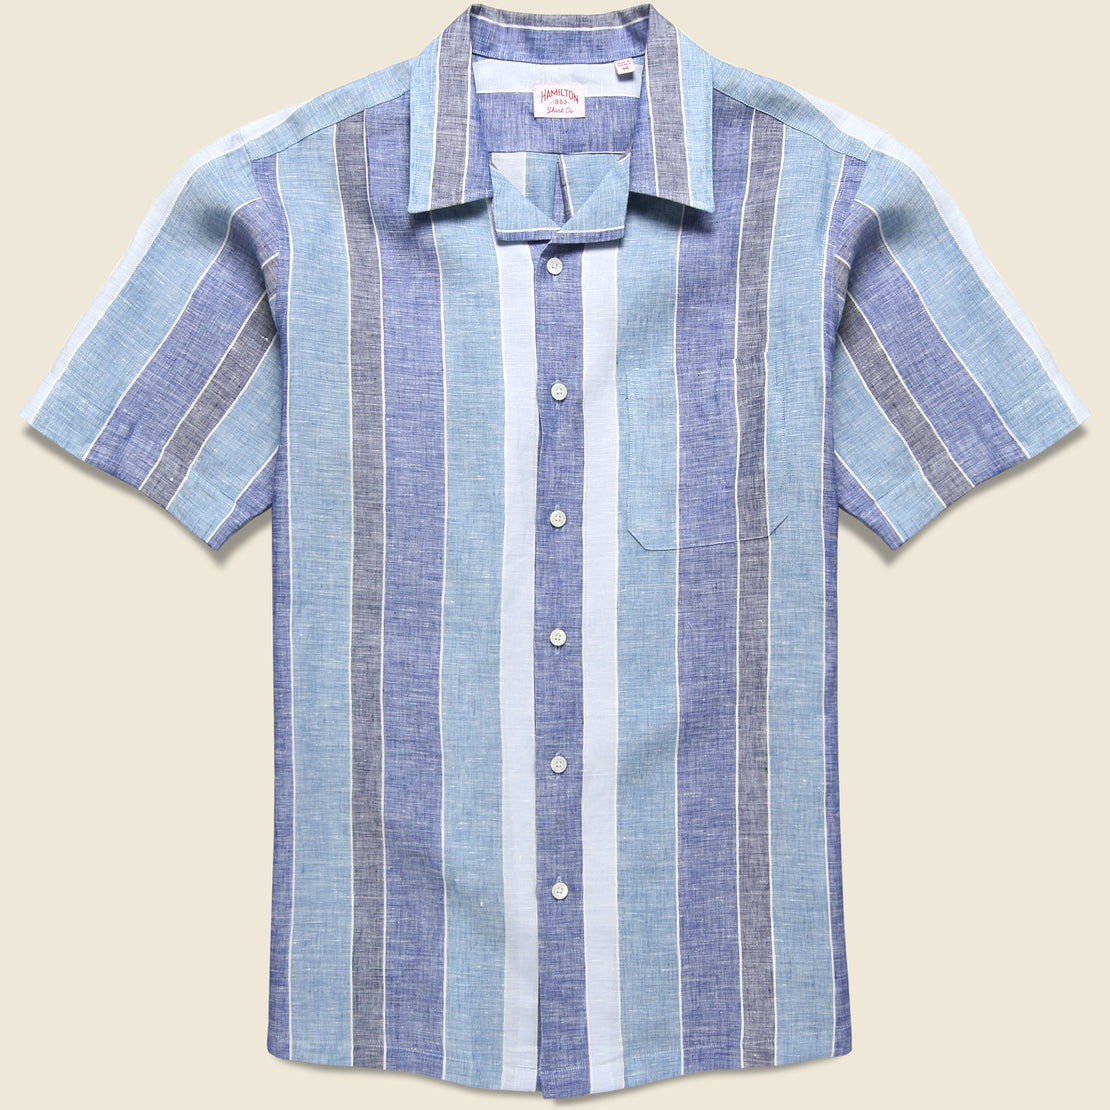 Hamilton Shirt Co. Wide Stripe Linen Camp Shirt - Blue/White